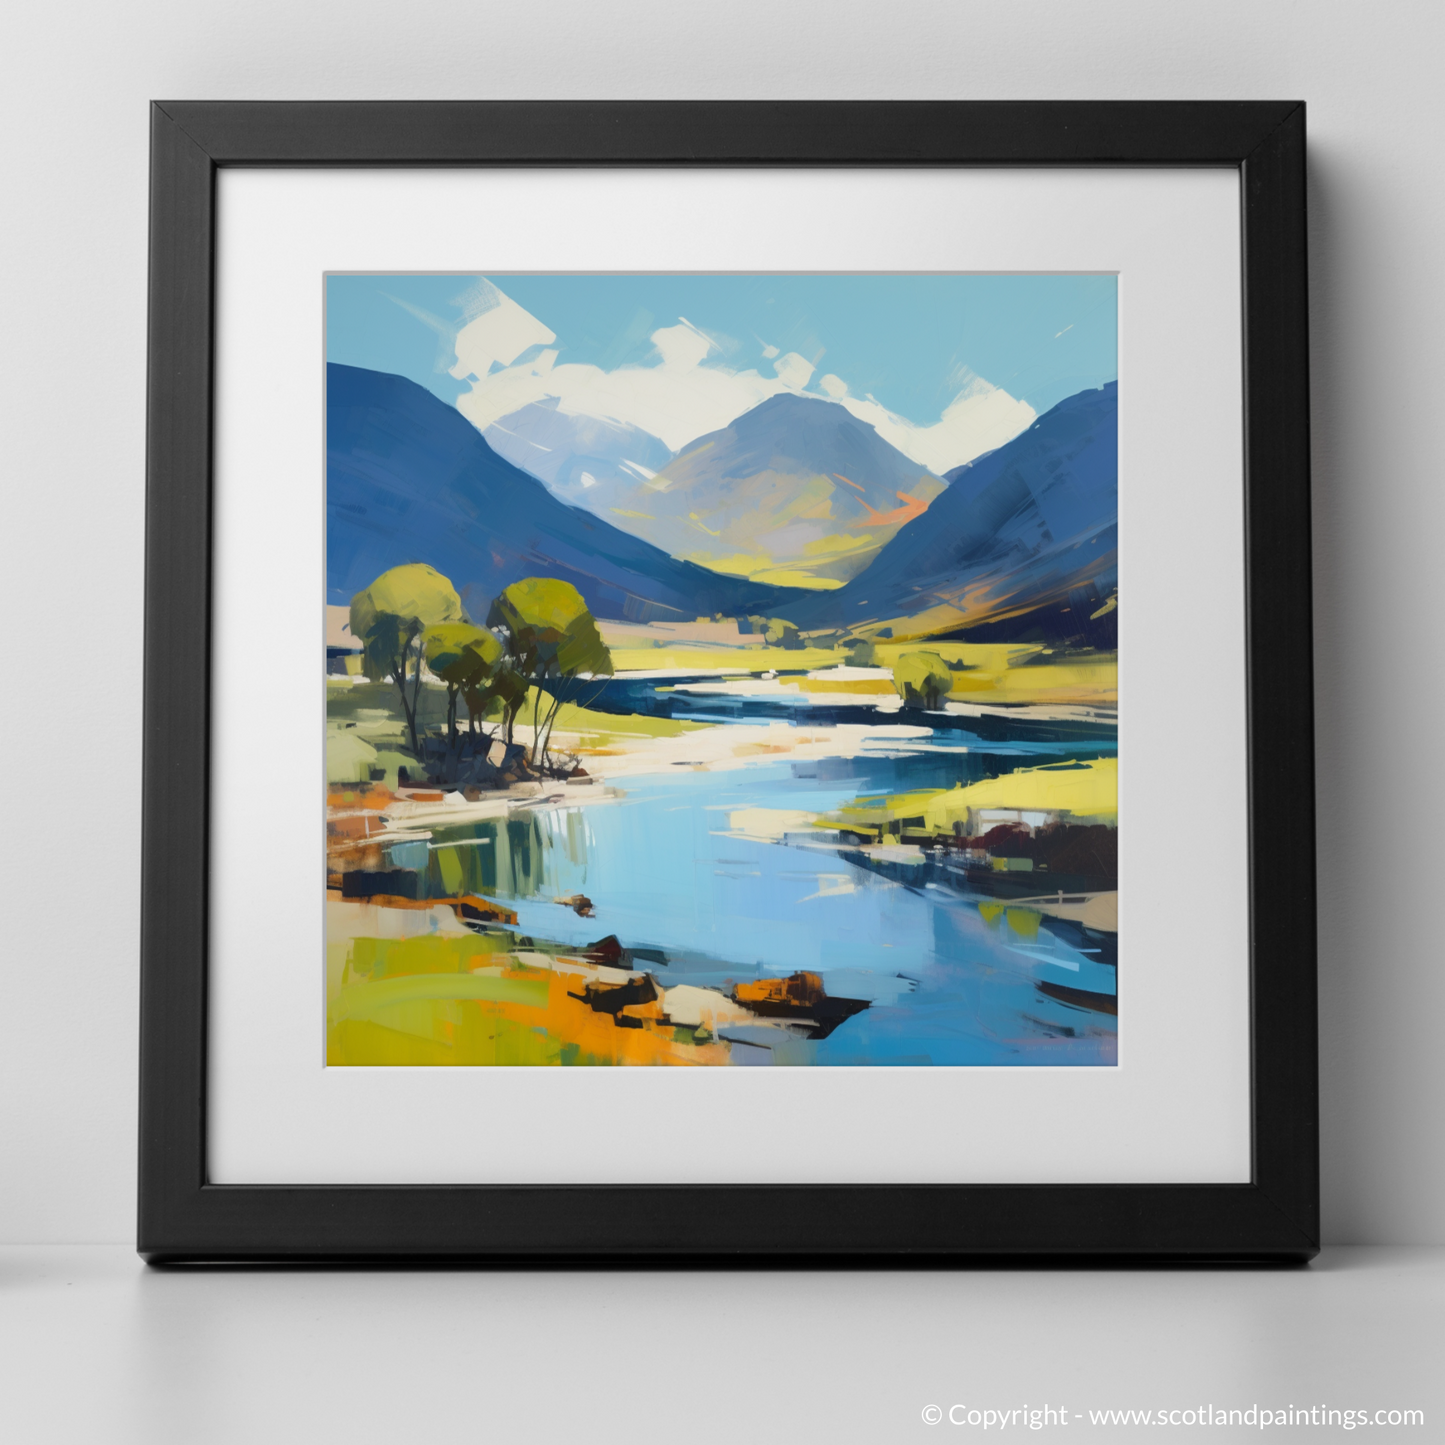 Summer Serenity at Glen Etive: A Contemporary Highland Masterpiece